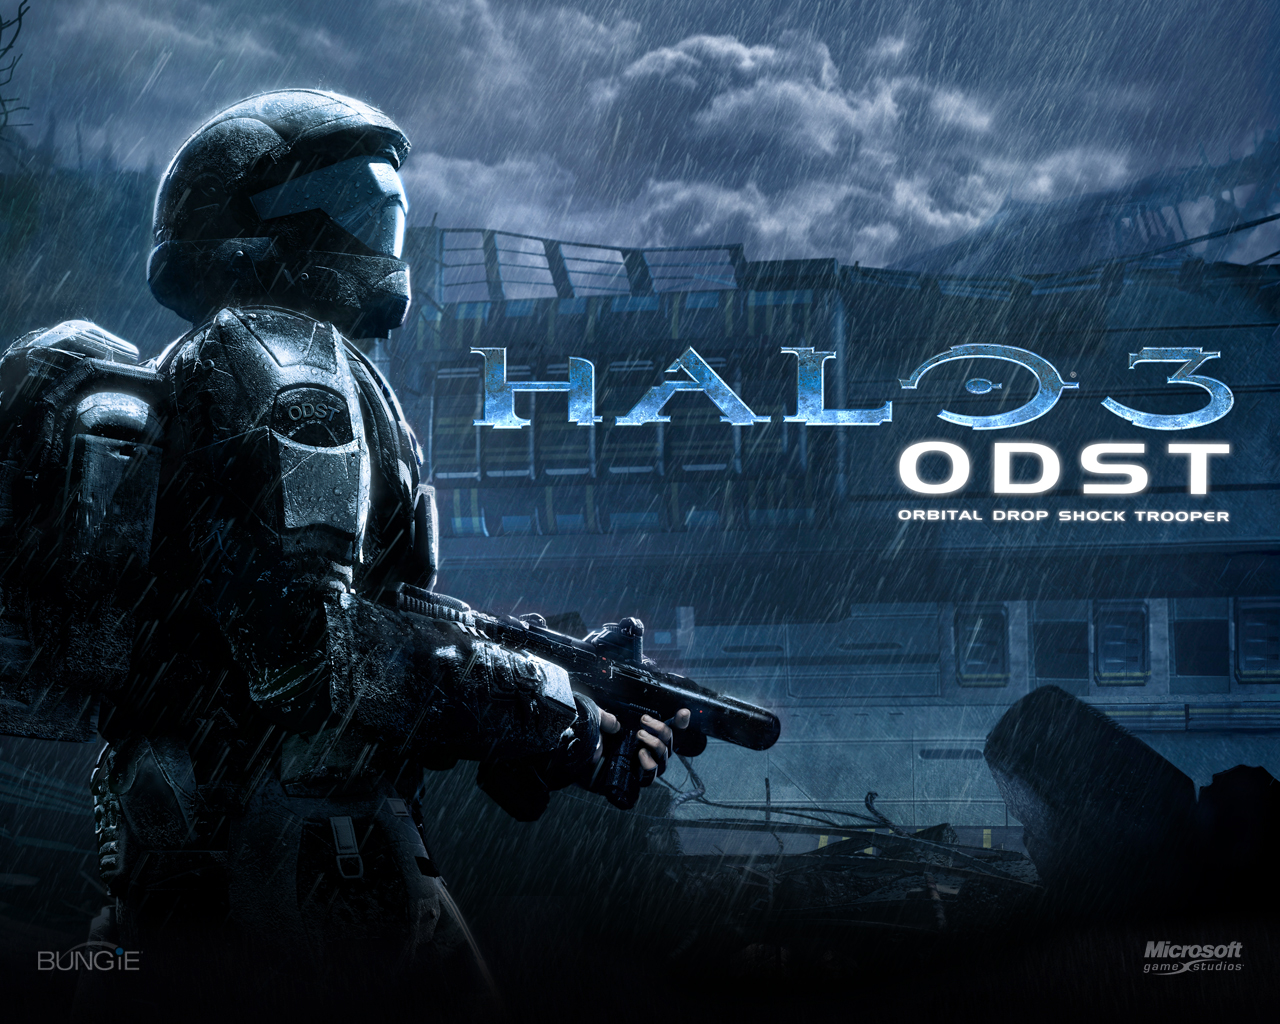 Halo3 Odst Wallpaper Halo